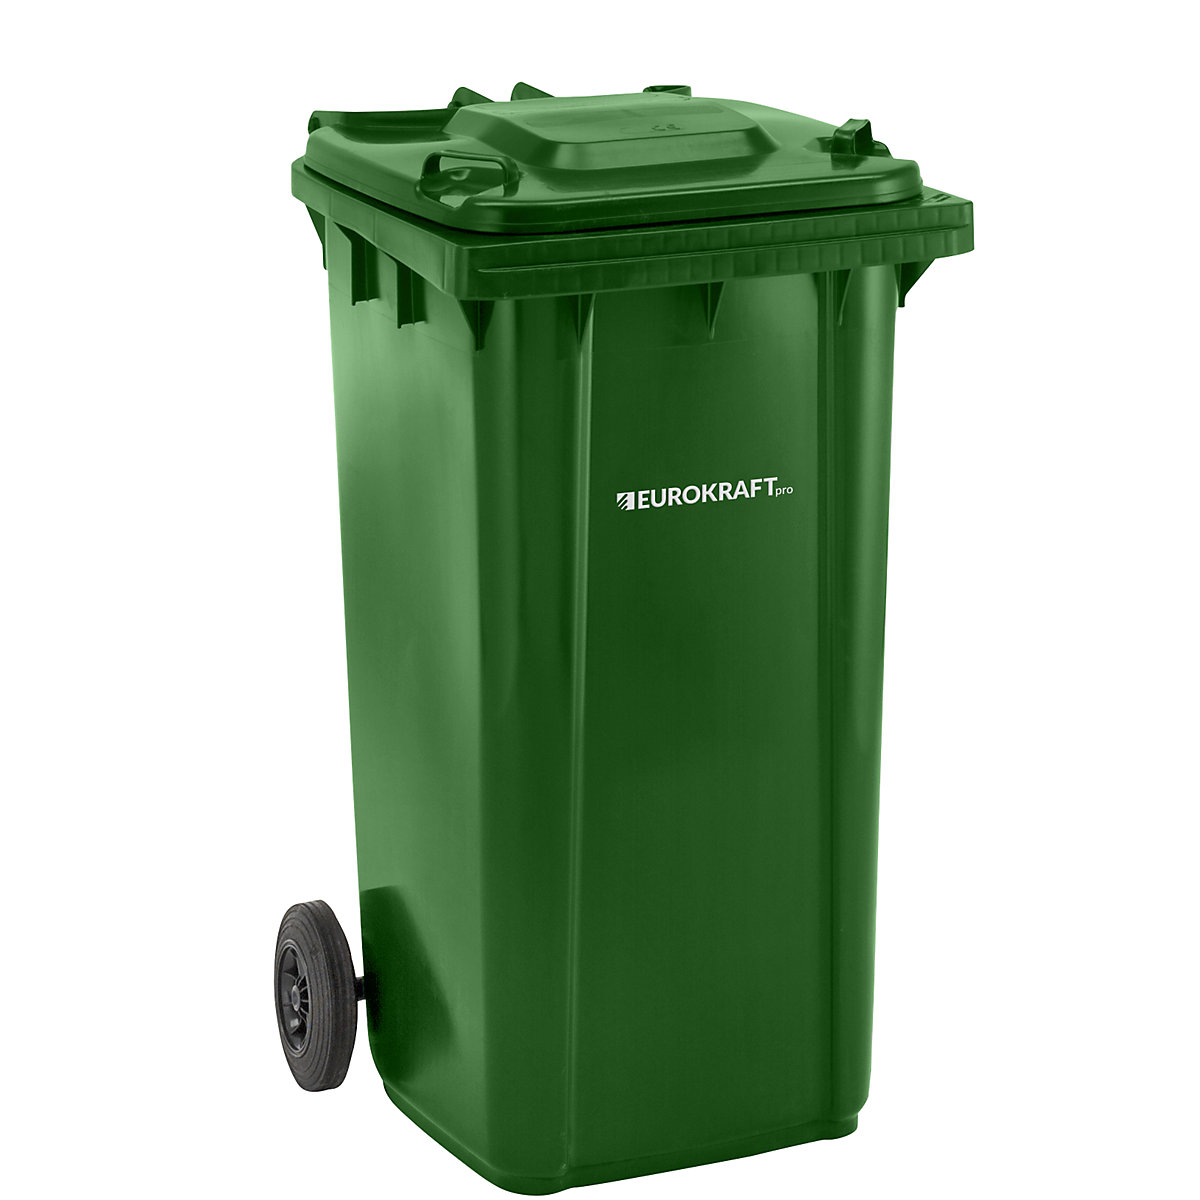 Mülltonne aus Kunststoff DIN EN 840 eurokraft pro, Volumen 240 l, BxHxT 580 x 1100 x 740 mm, grün, ab 5 Stk